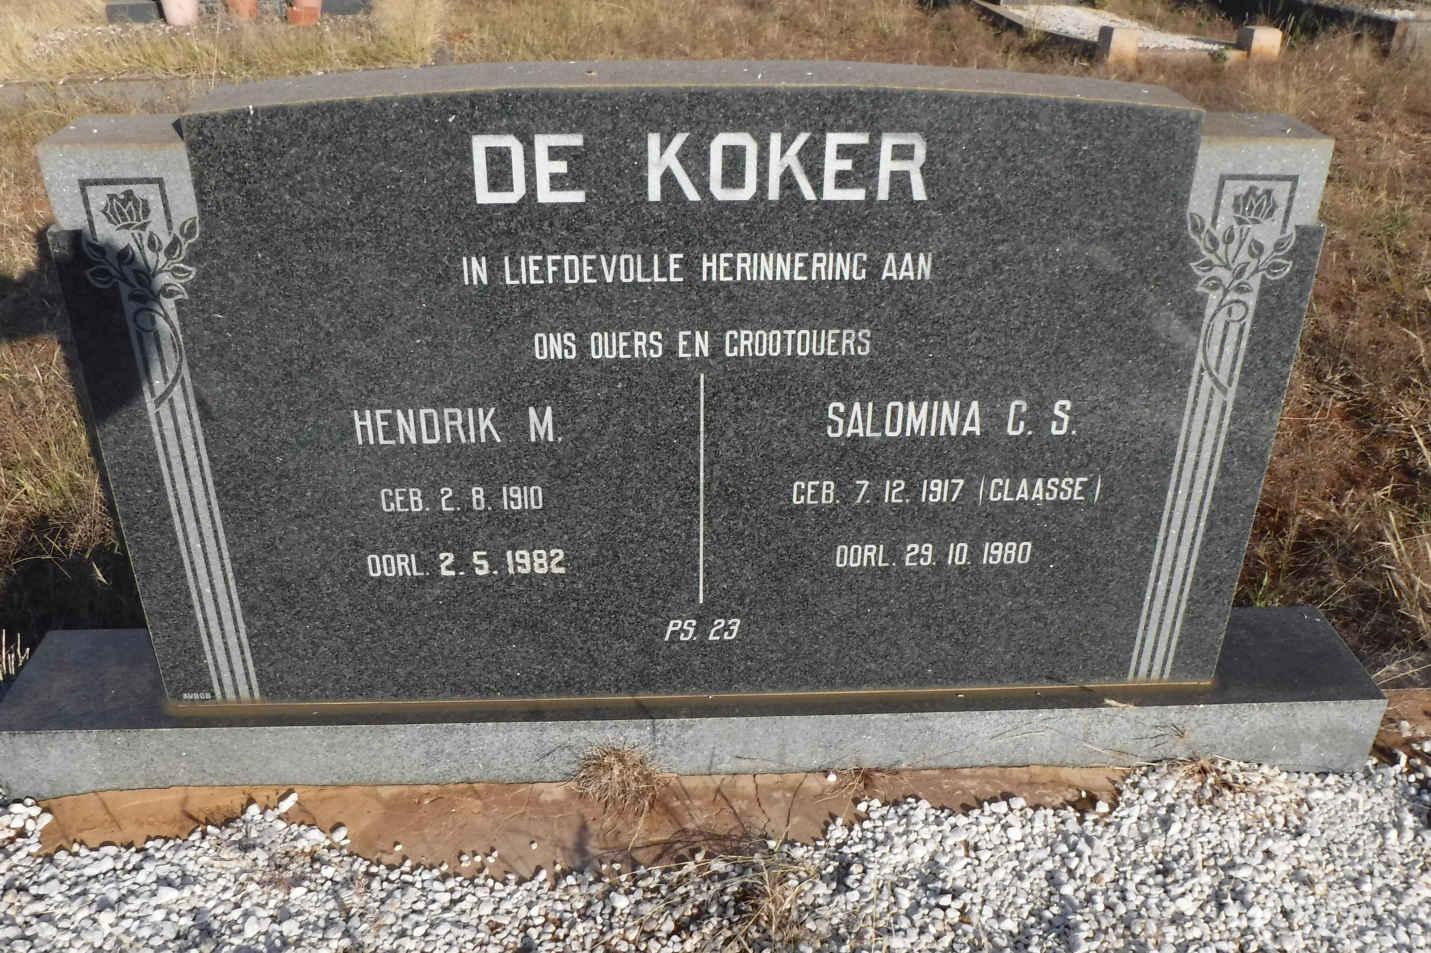 KOKER Hendrik M., de 1910-1982 & Salomina C.S. CLAASSE 1917-1980